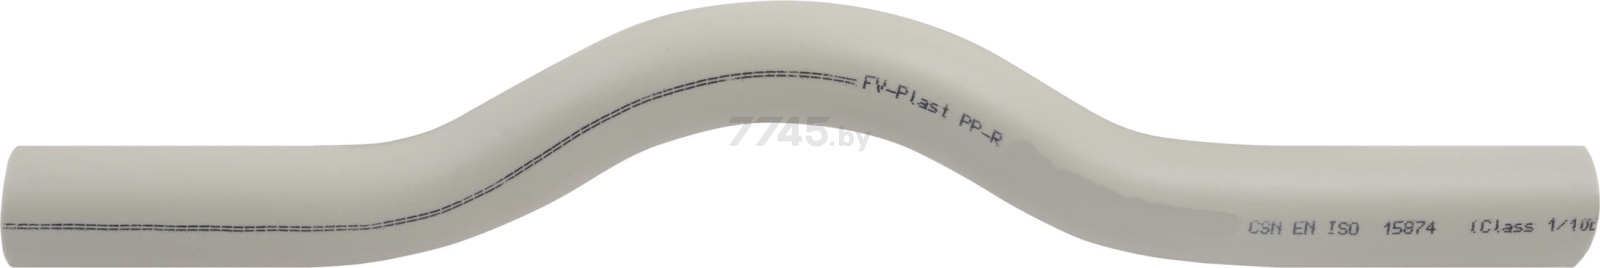 Обвод ПП 20 FV PLAST серый (AA233020000)